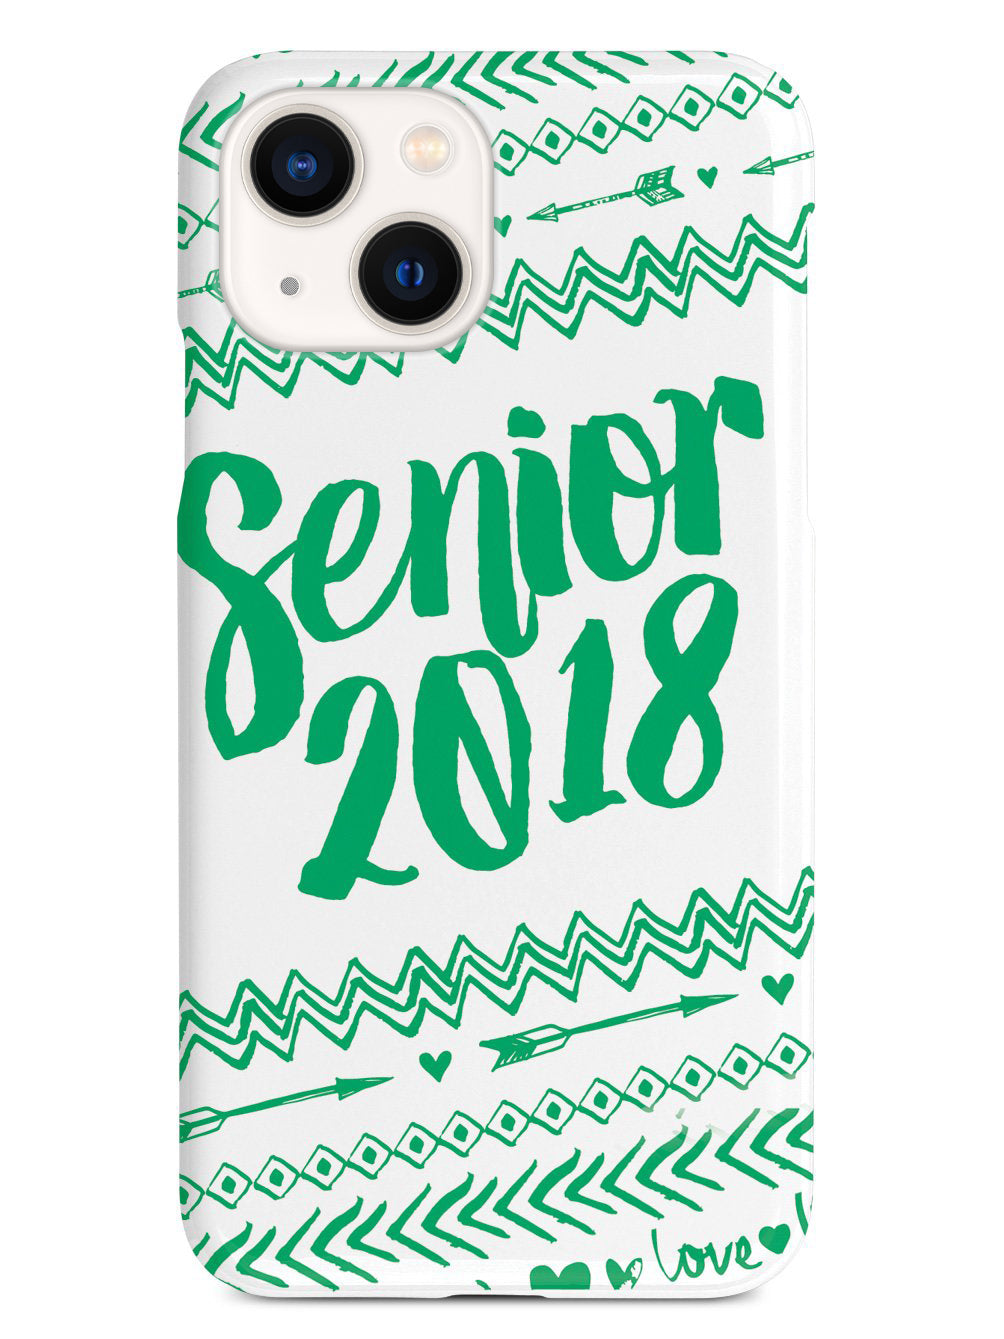 Senior 2018 - Green Case